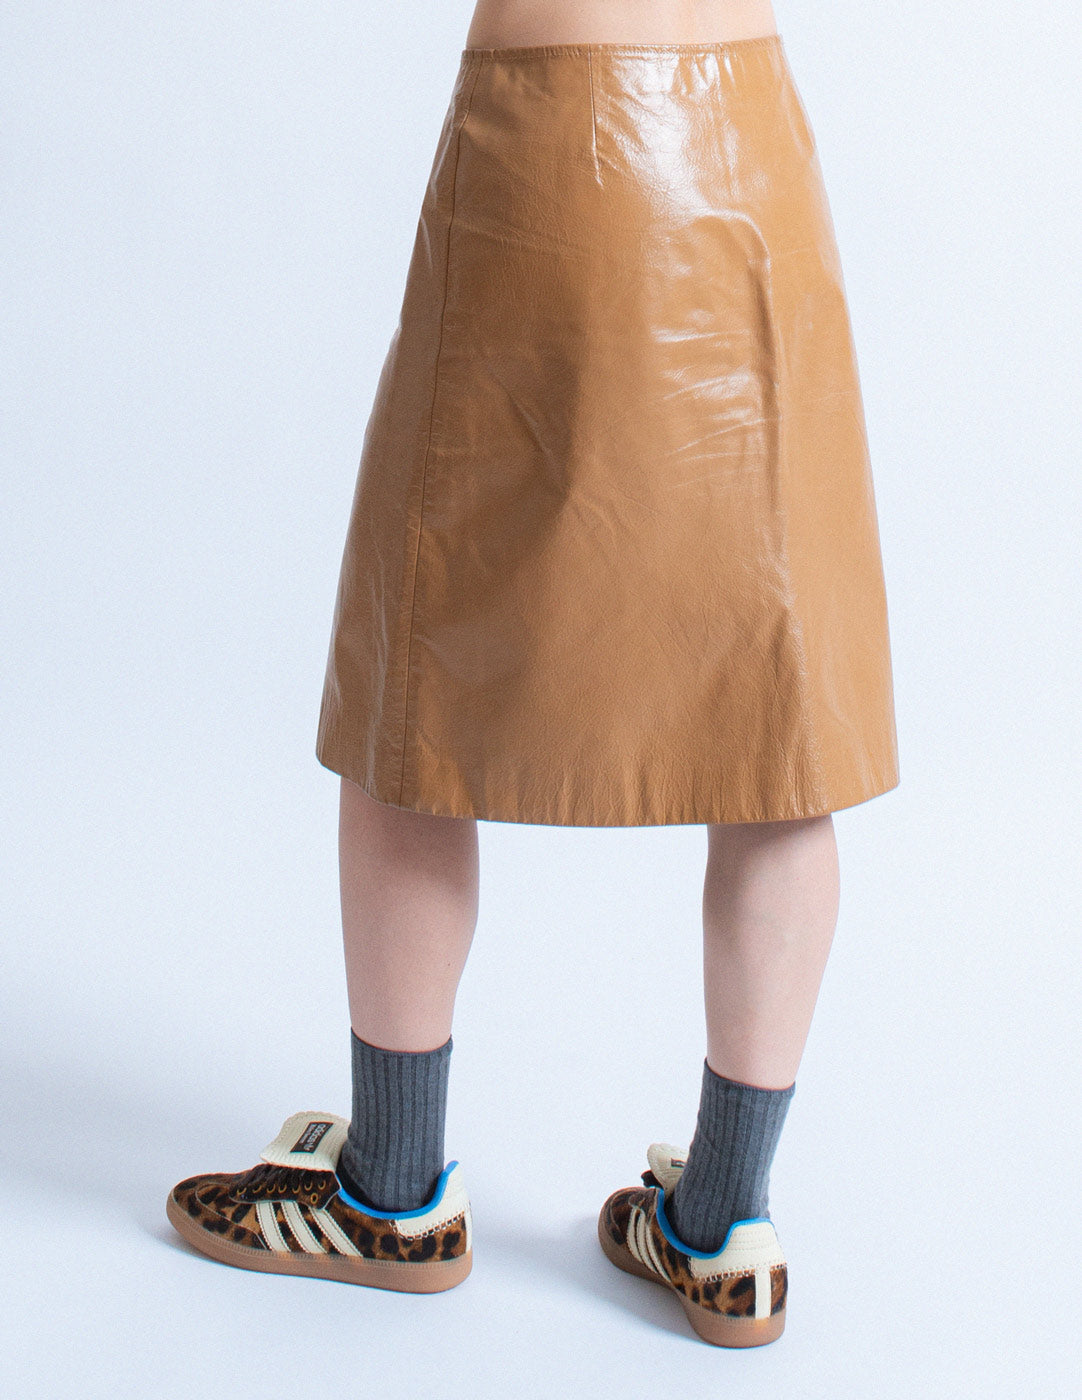 Miu Miu vintage caramel zipped leather skirt back detail